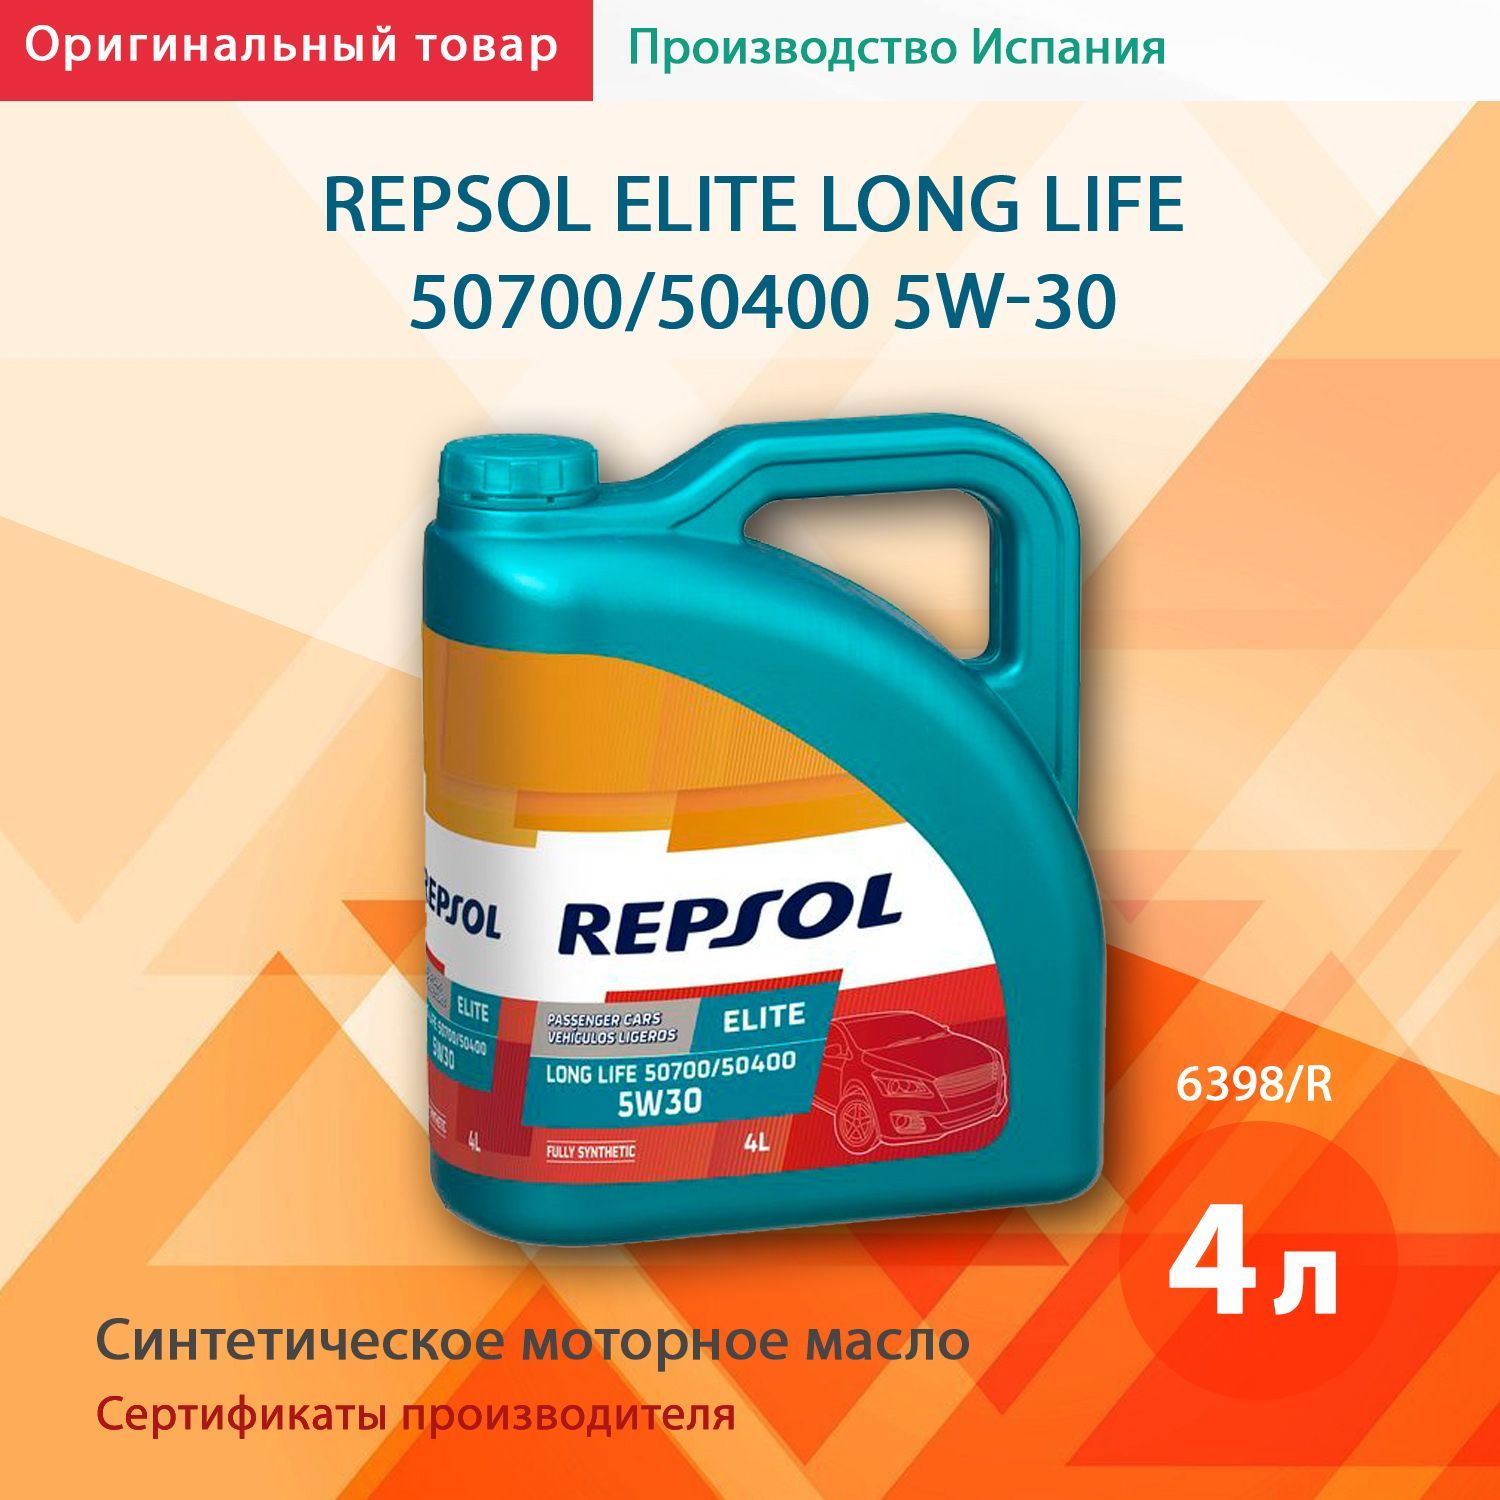 Repsol 5w30. Масло Испания моторное Repsol 5w30. Repsol 5w40 4+1 артикул. Масла repsol 5w 30